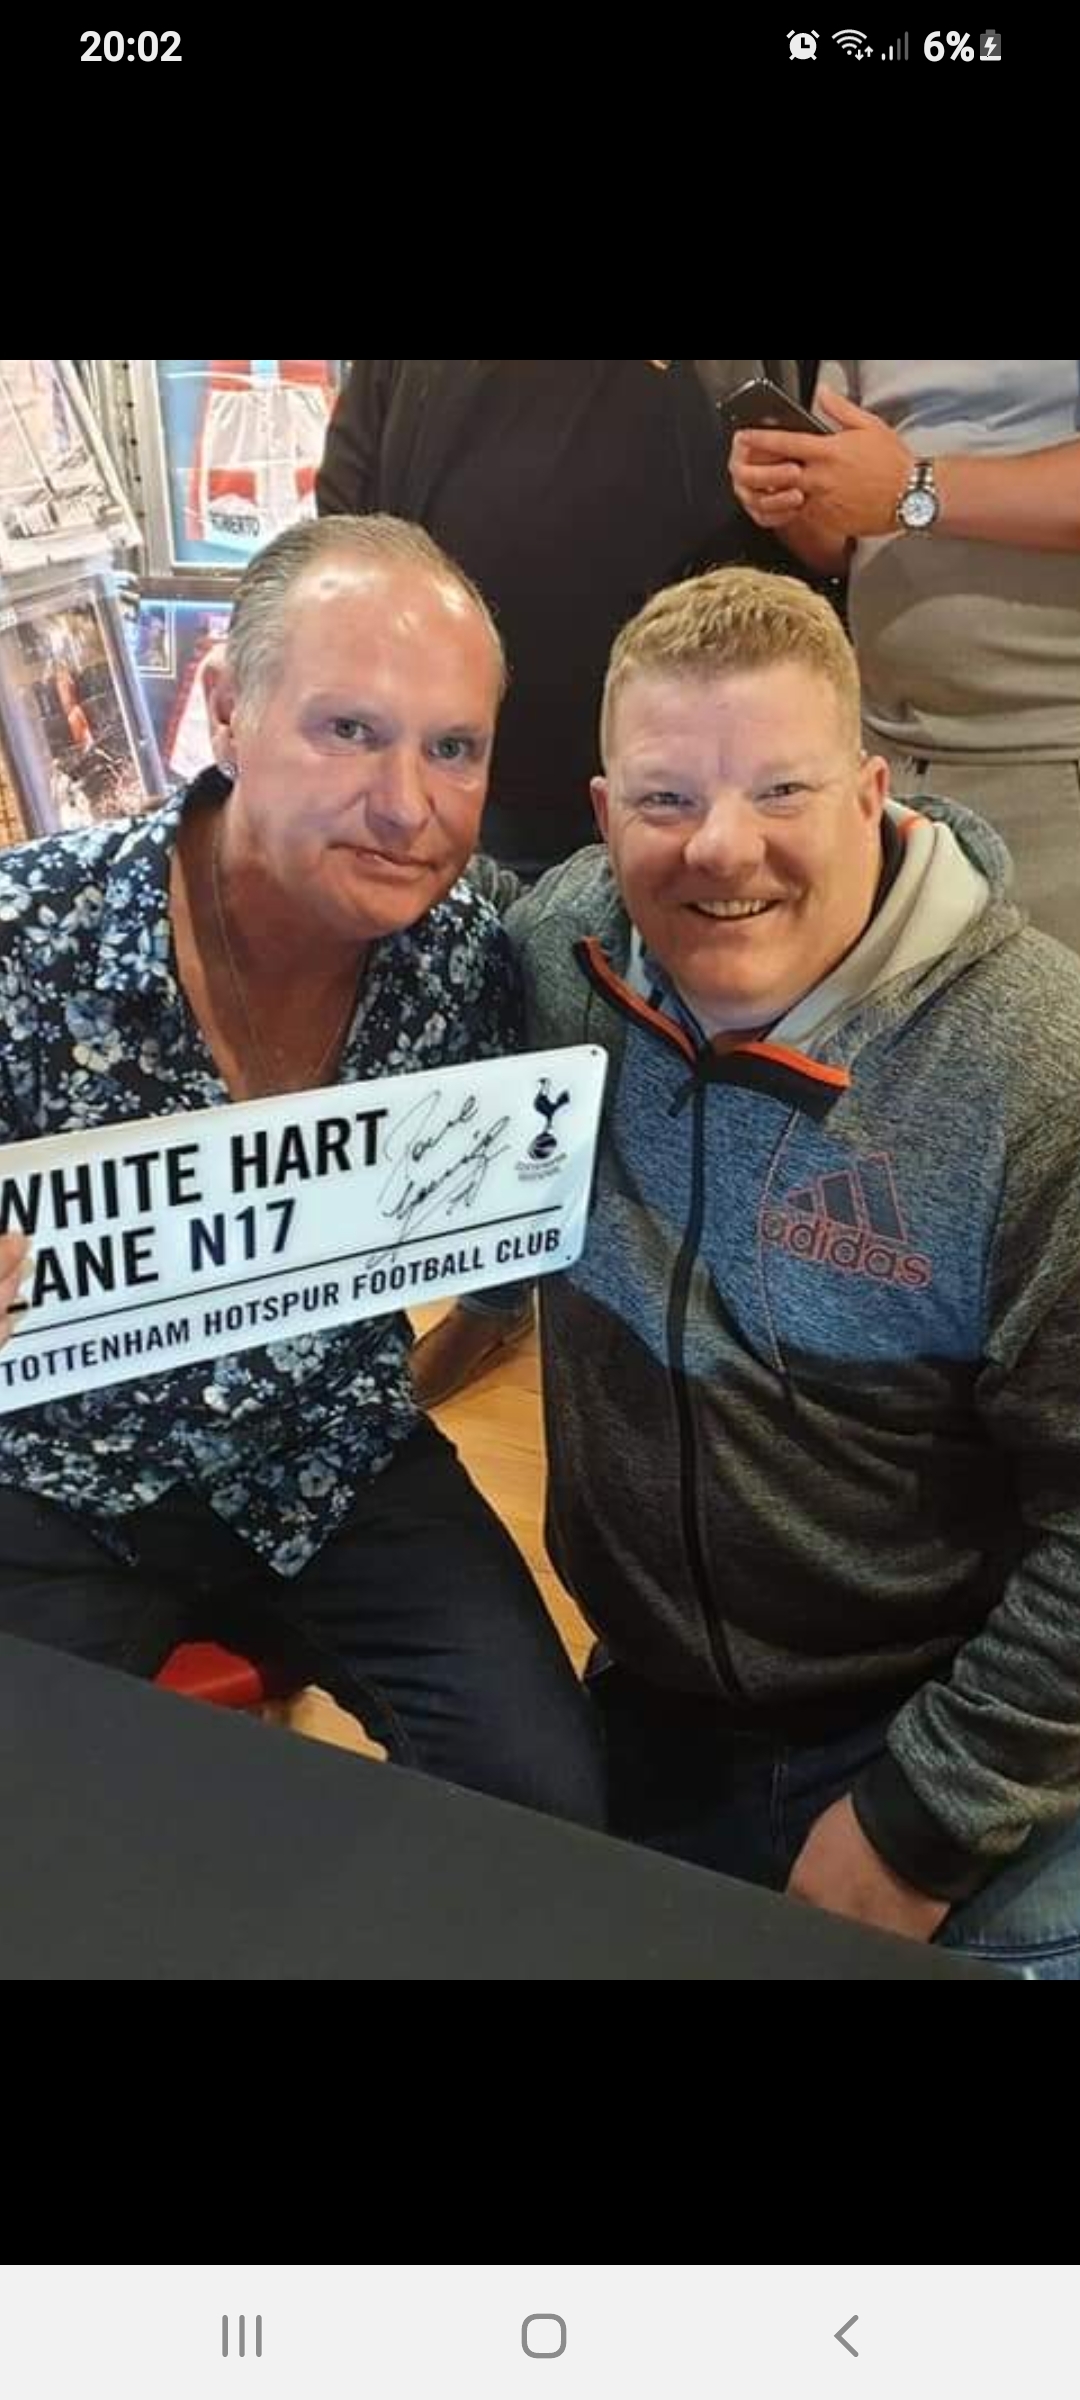 Paul Gascoigne signs a White Heart Lane plaque for Bradley Davies.